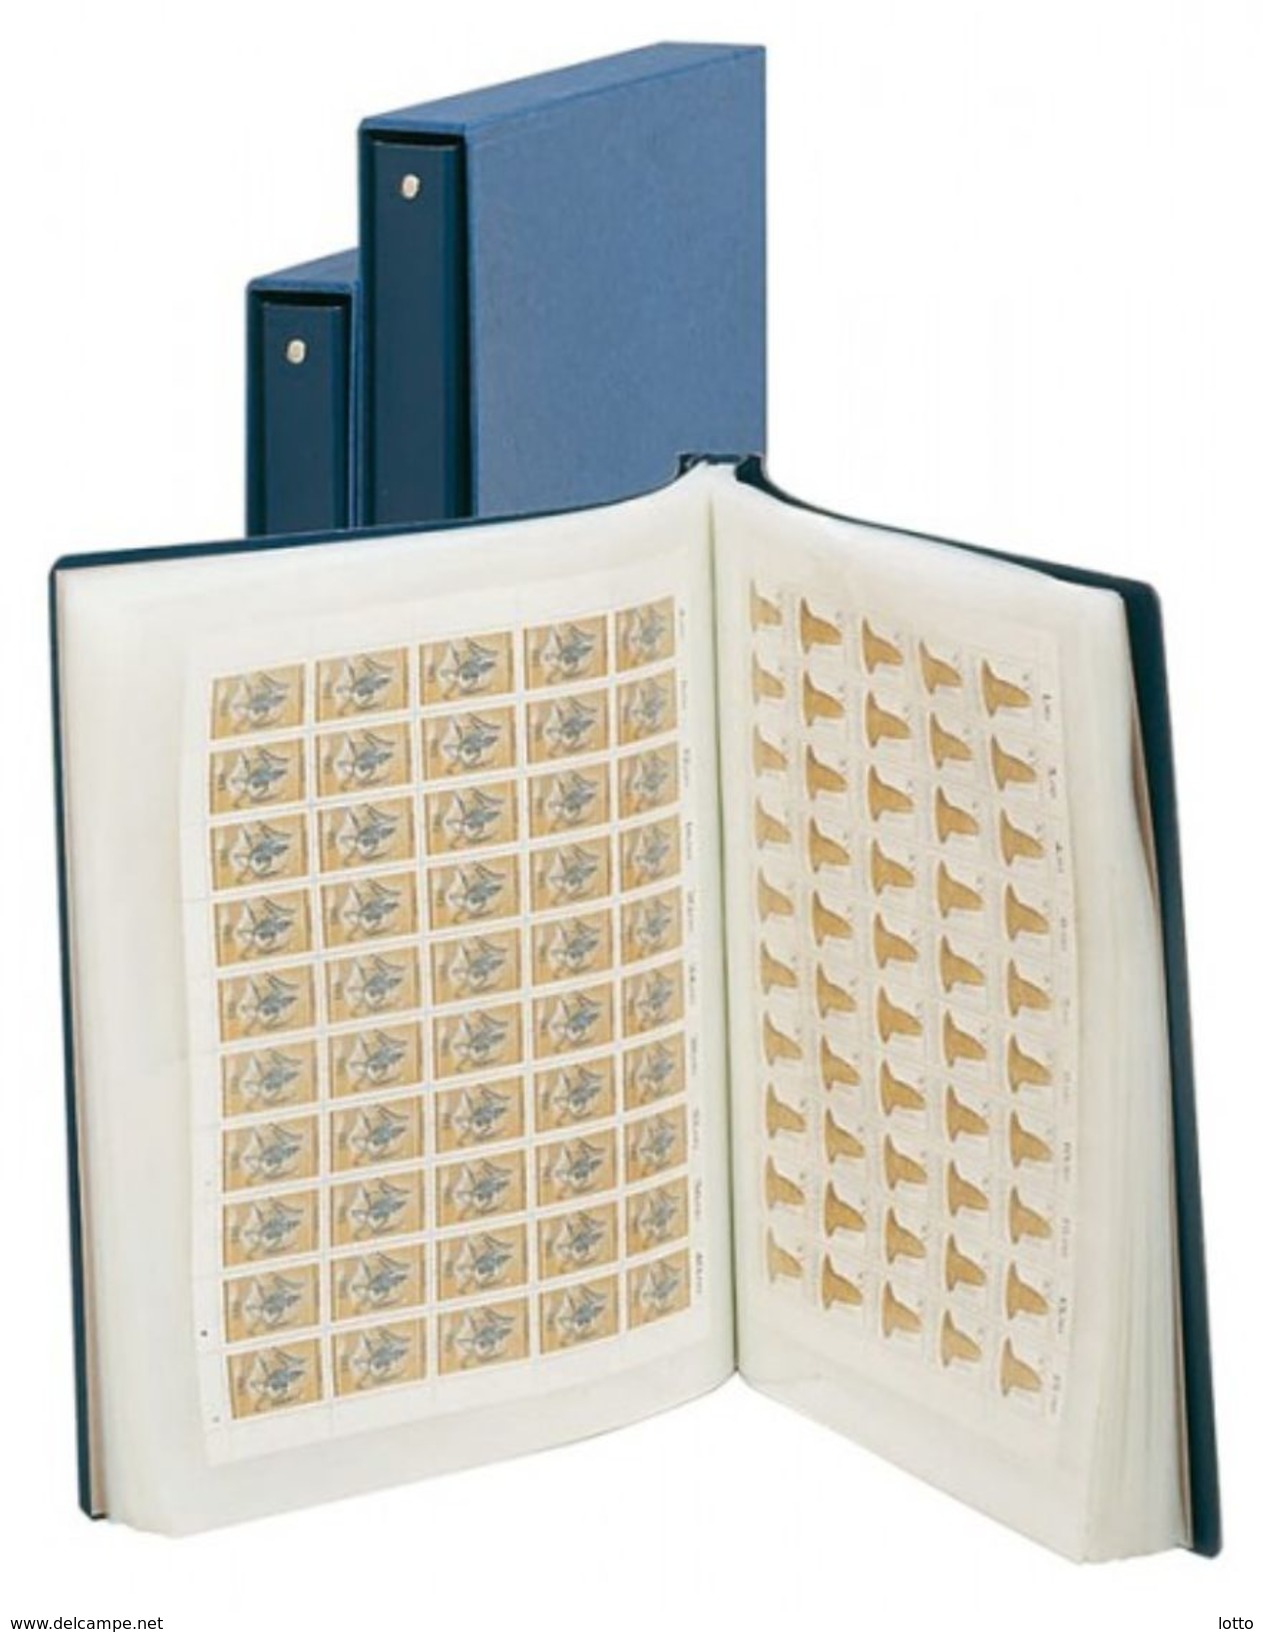 Lindner Bogenalbum, 280 X 385 X 32 Mm (ohne Kassette), Empf. VP 48,50 +++ NEU OVP +++ (861) - Binders Only